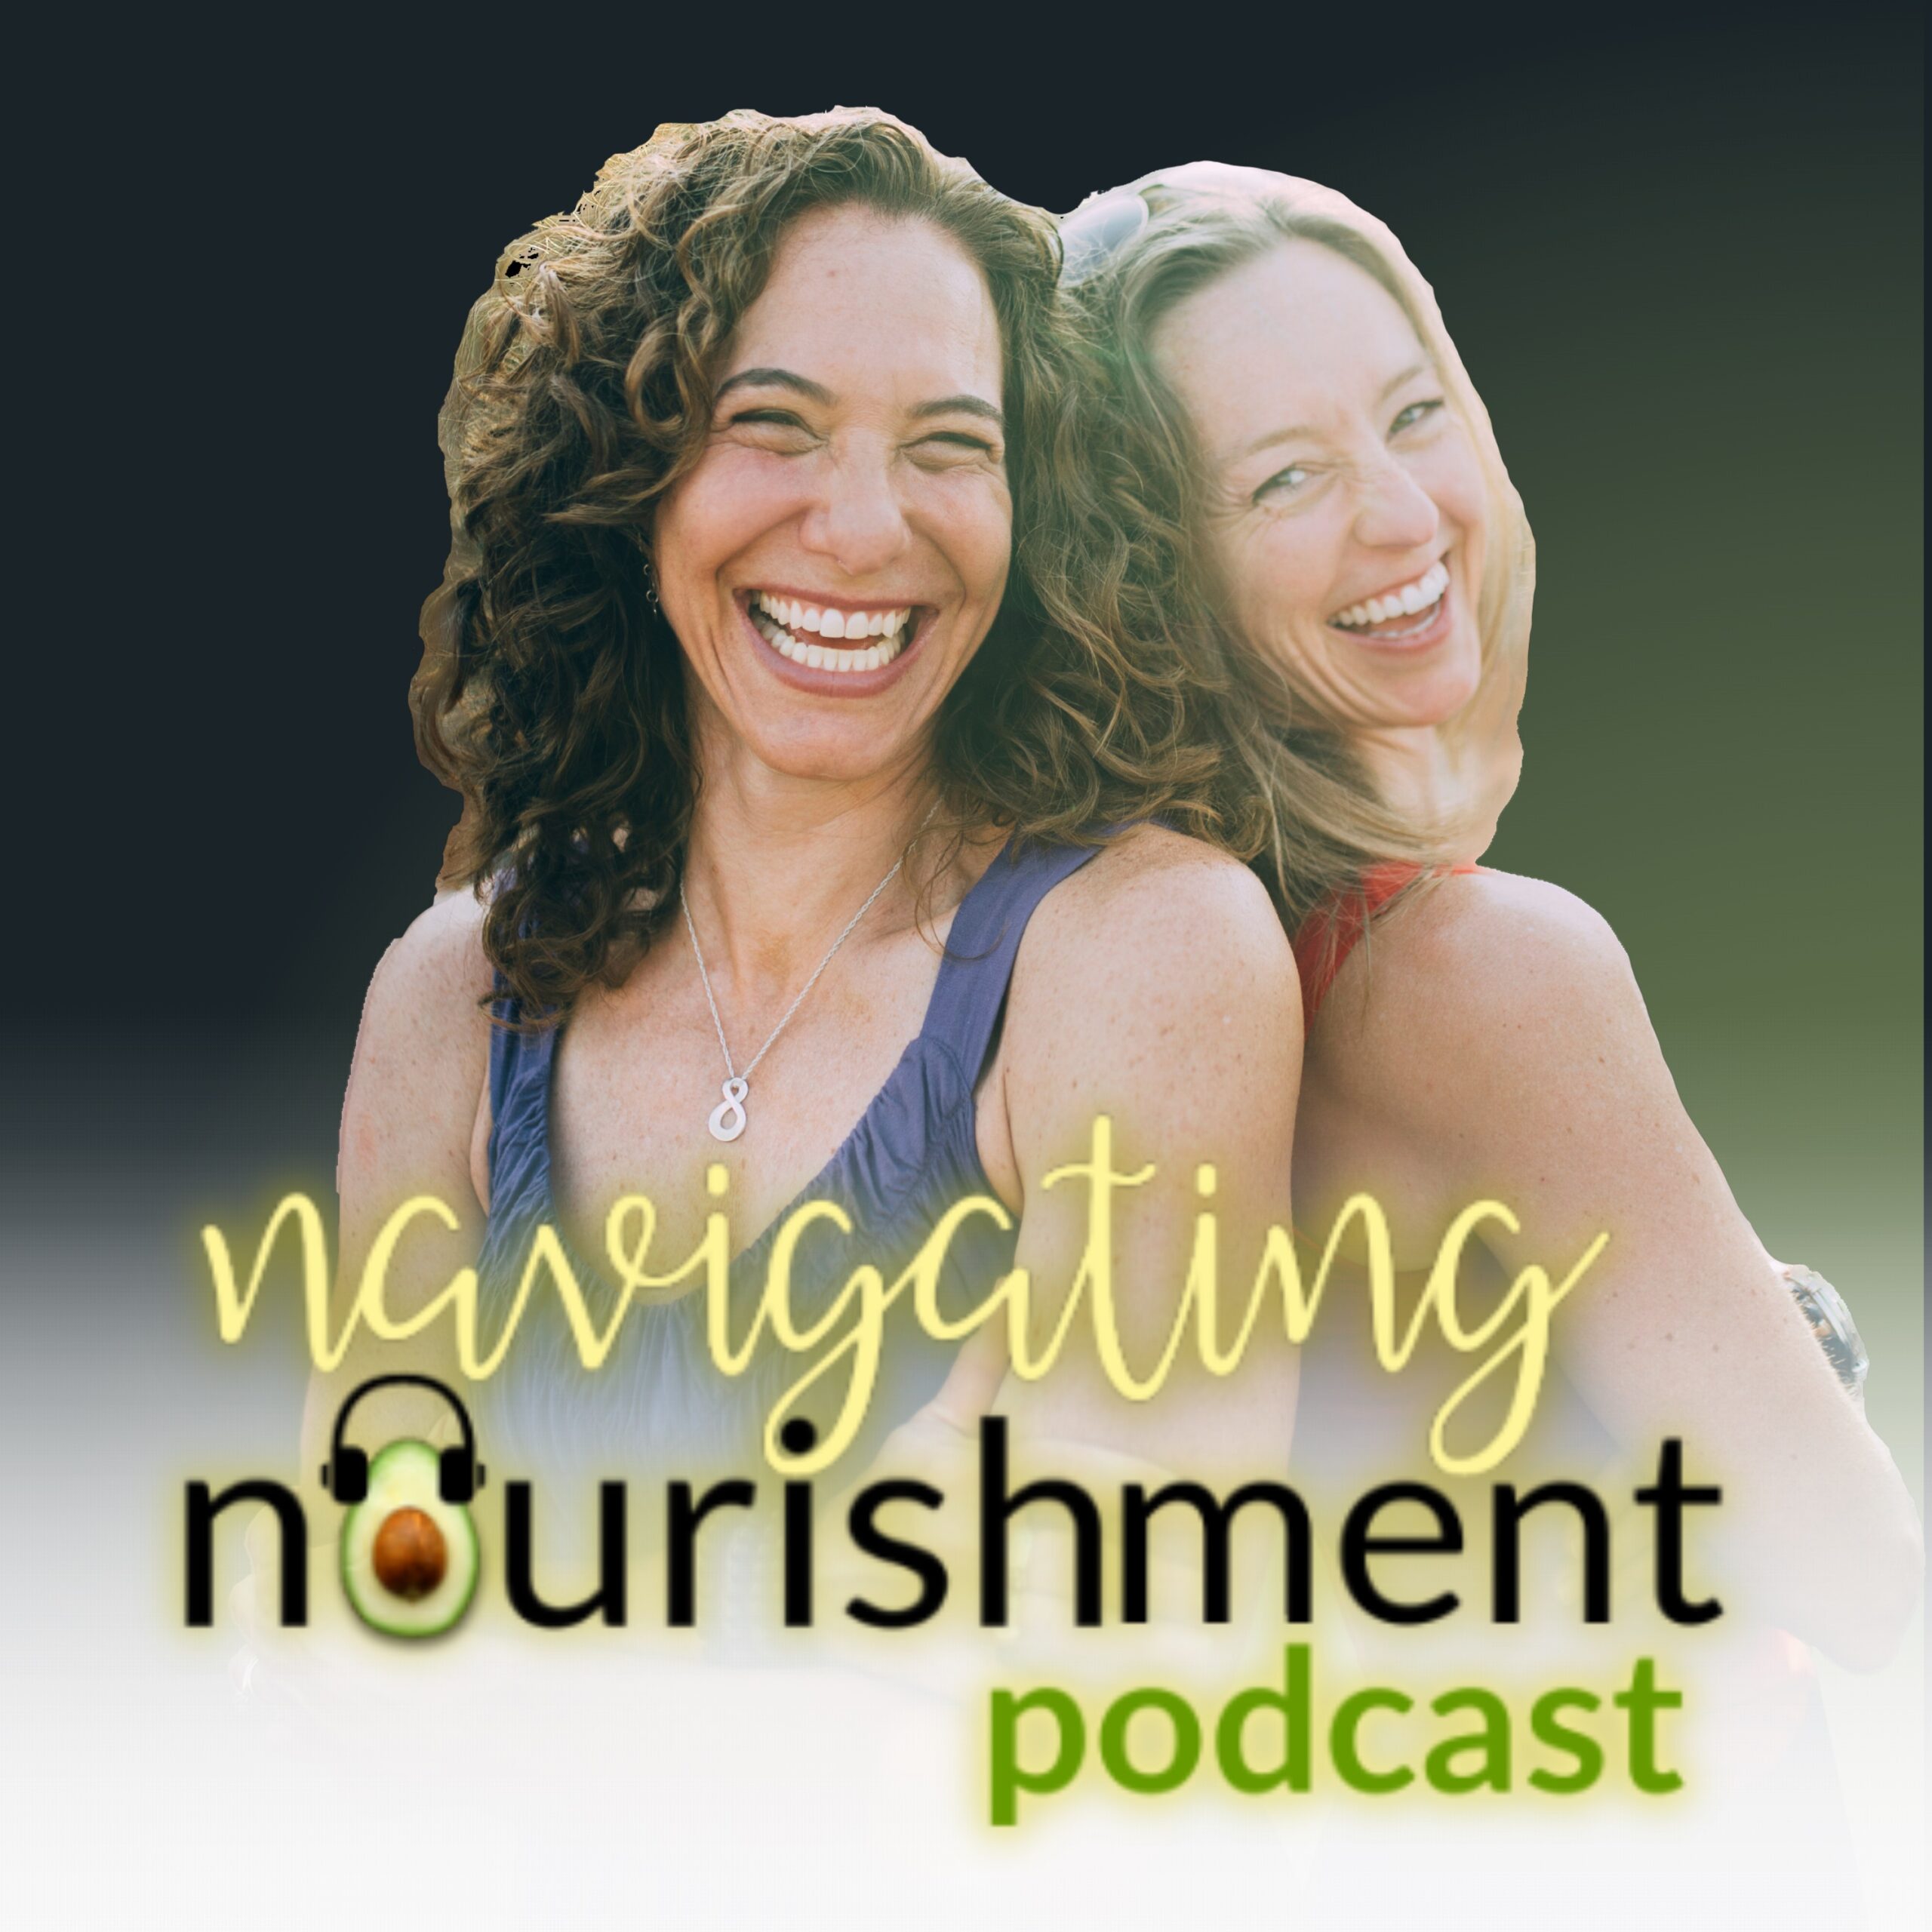 Navigating Nourishment Podcast